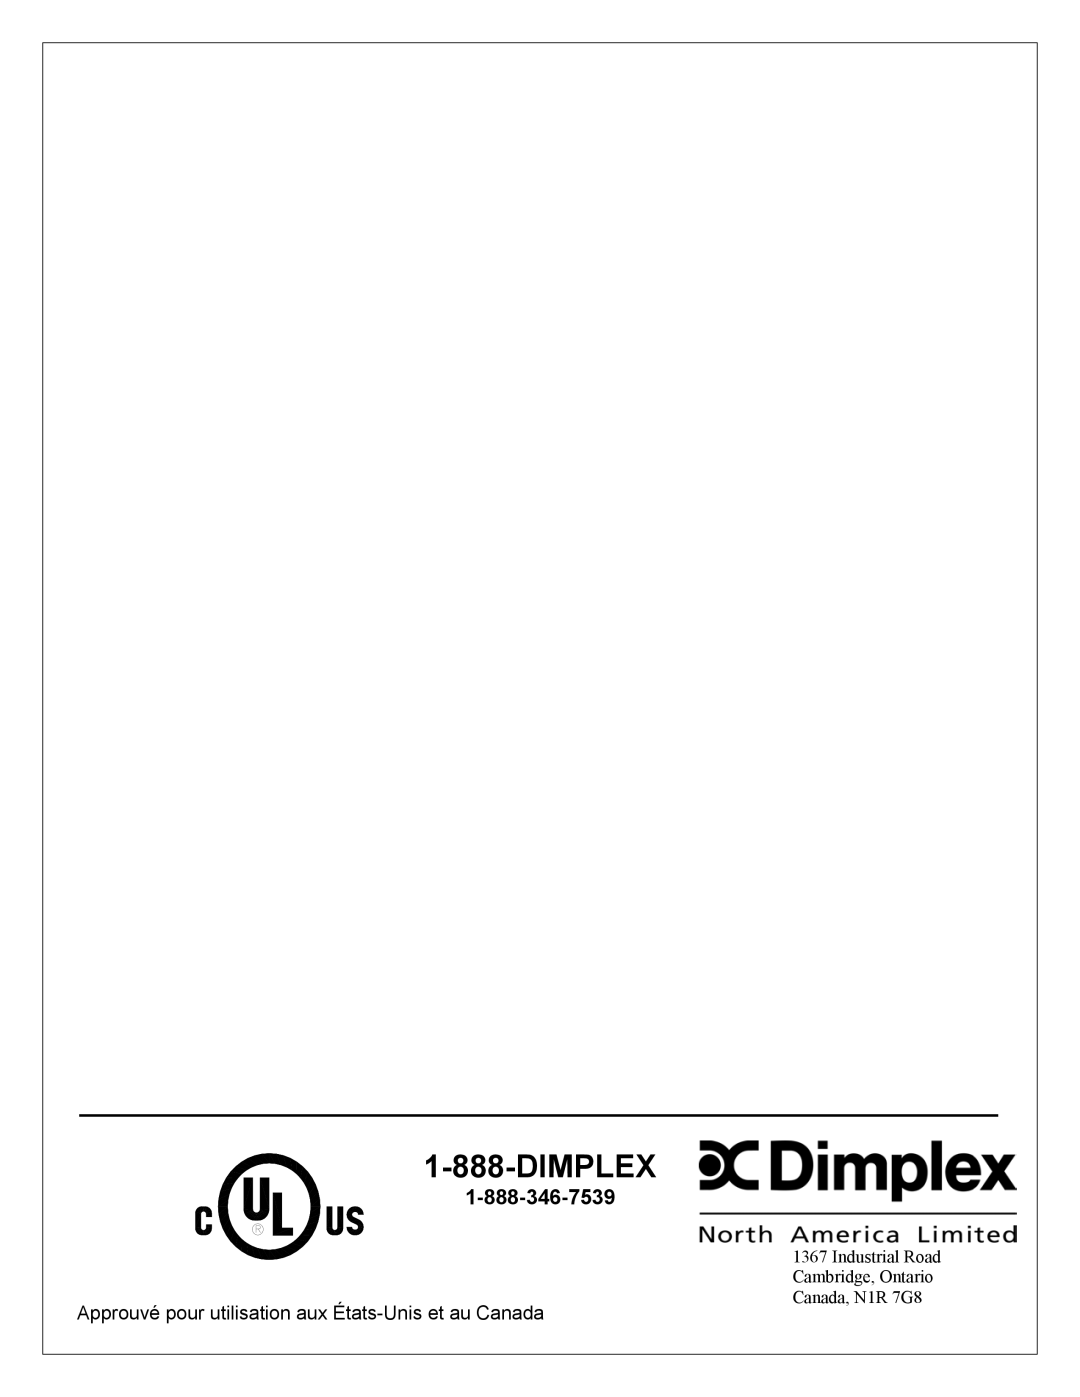 Dimplex DFI23TRIMX manual Dimplex, Industrial Road Cambridge, Ontario, Canada, N1R 7G8 